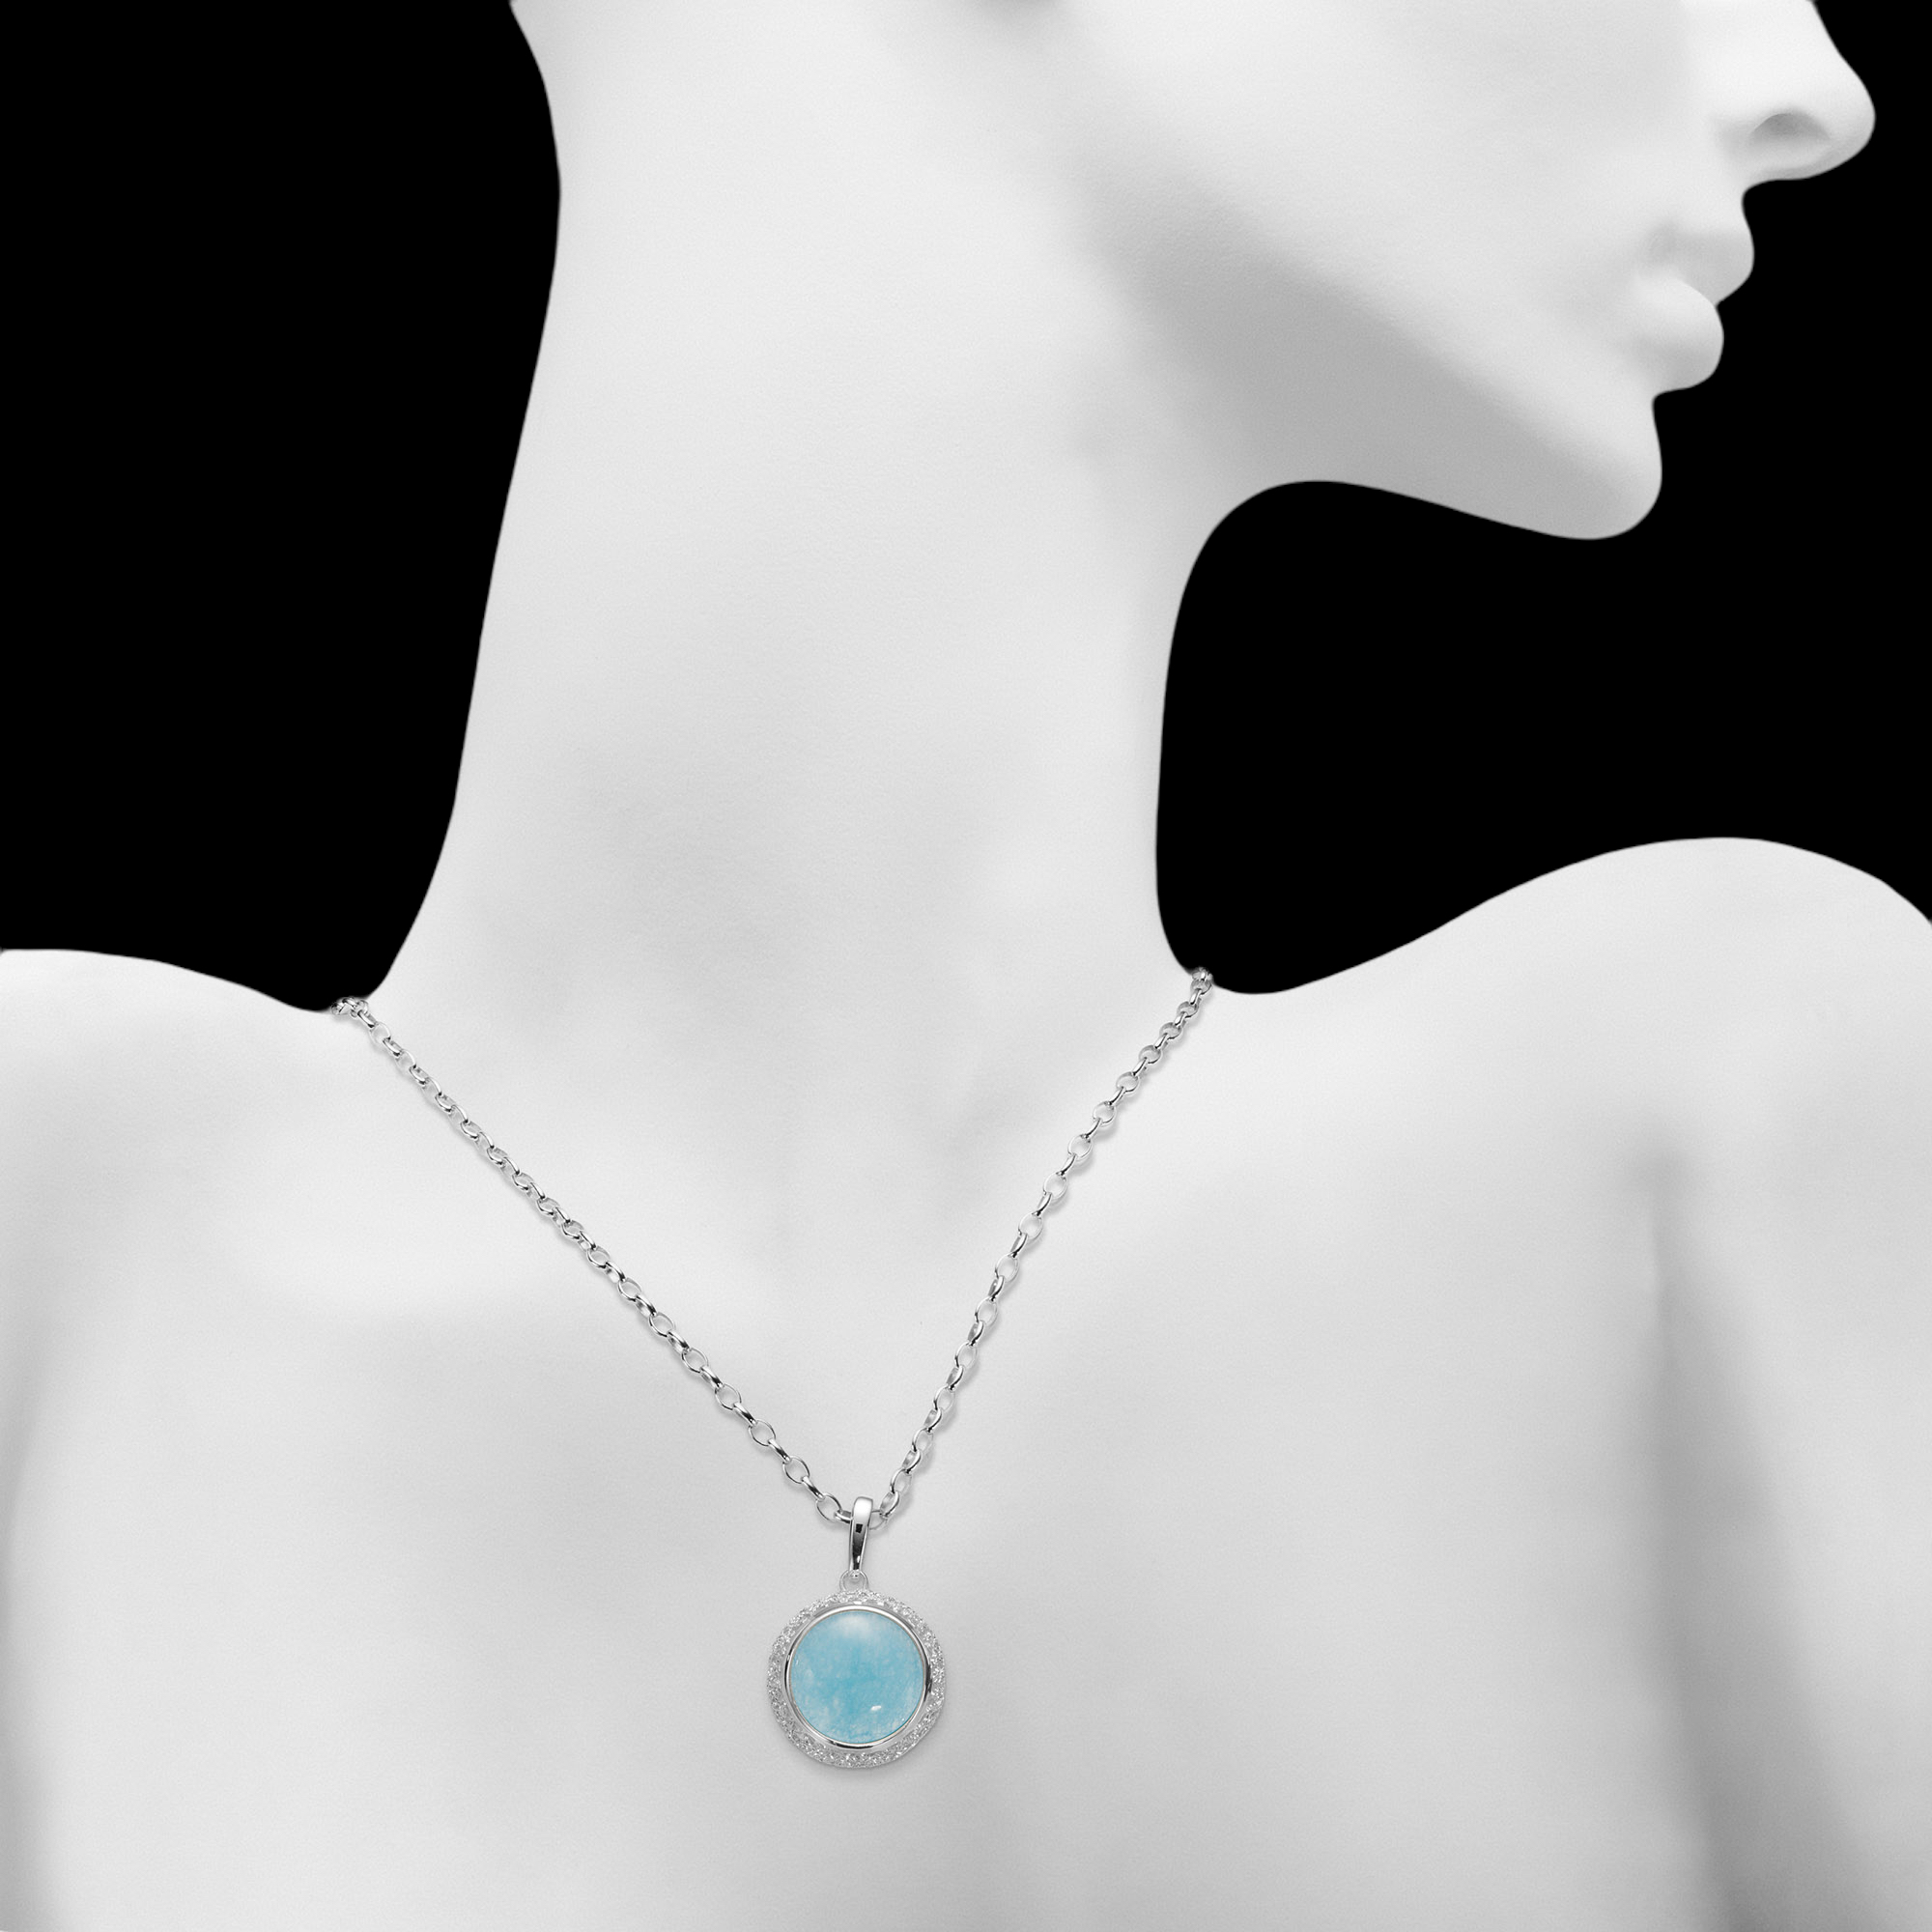 Edited silver pendant with a blue quartz stone